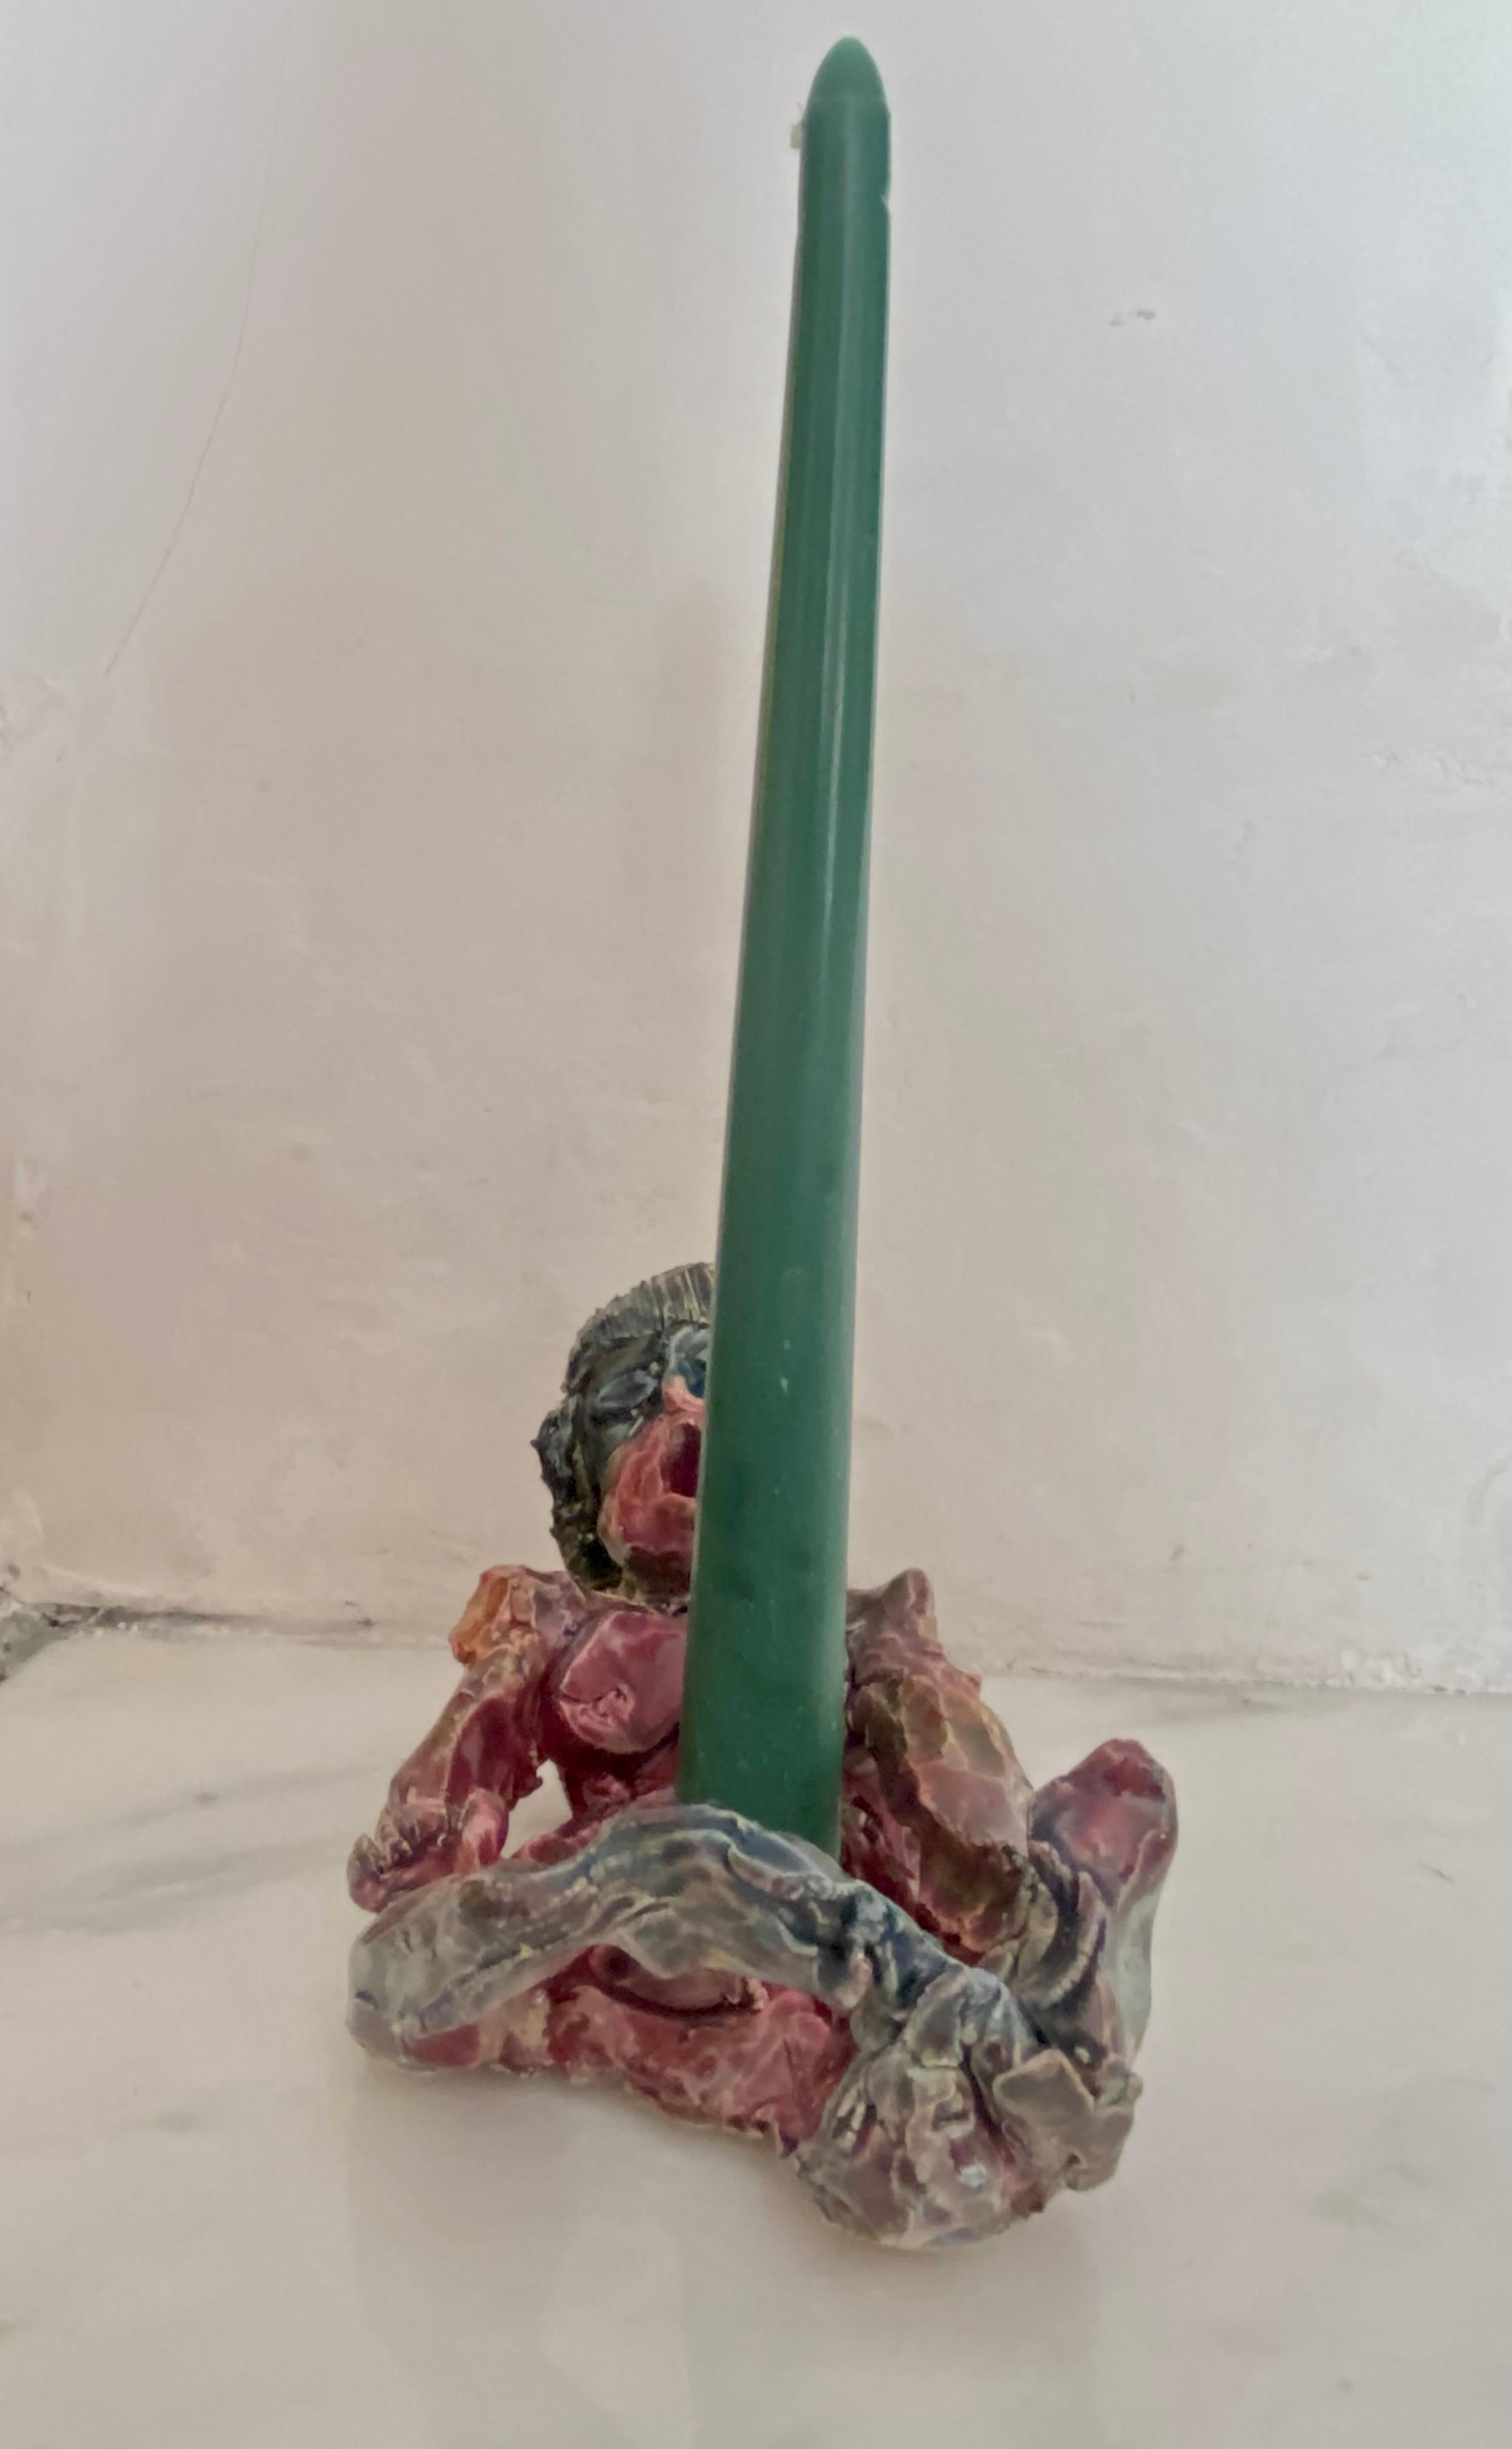 Contemporary Multi Color Ceramic Figurine Candle Holder, 21st Century by Mattia Biagi For Sale